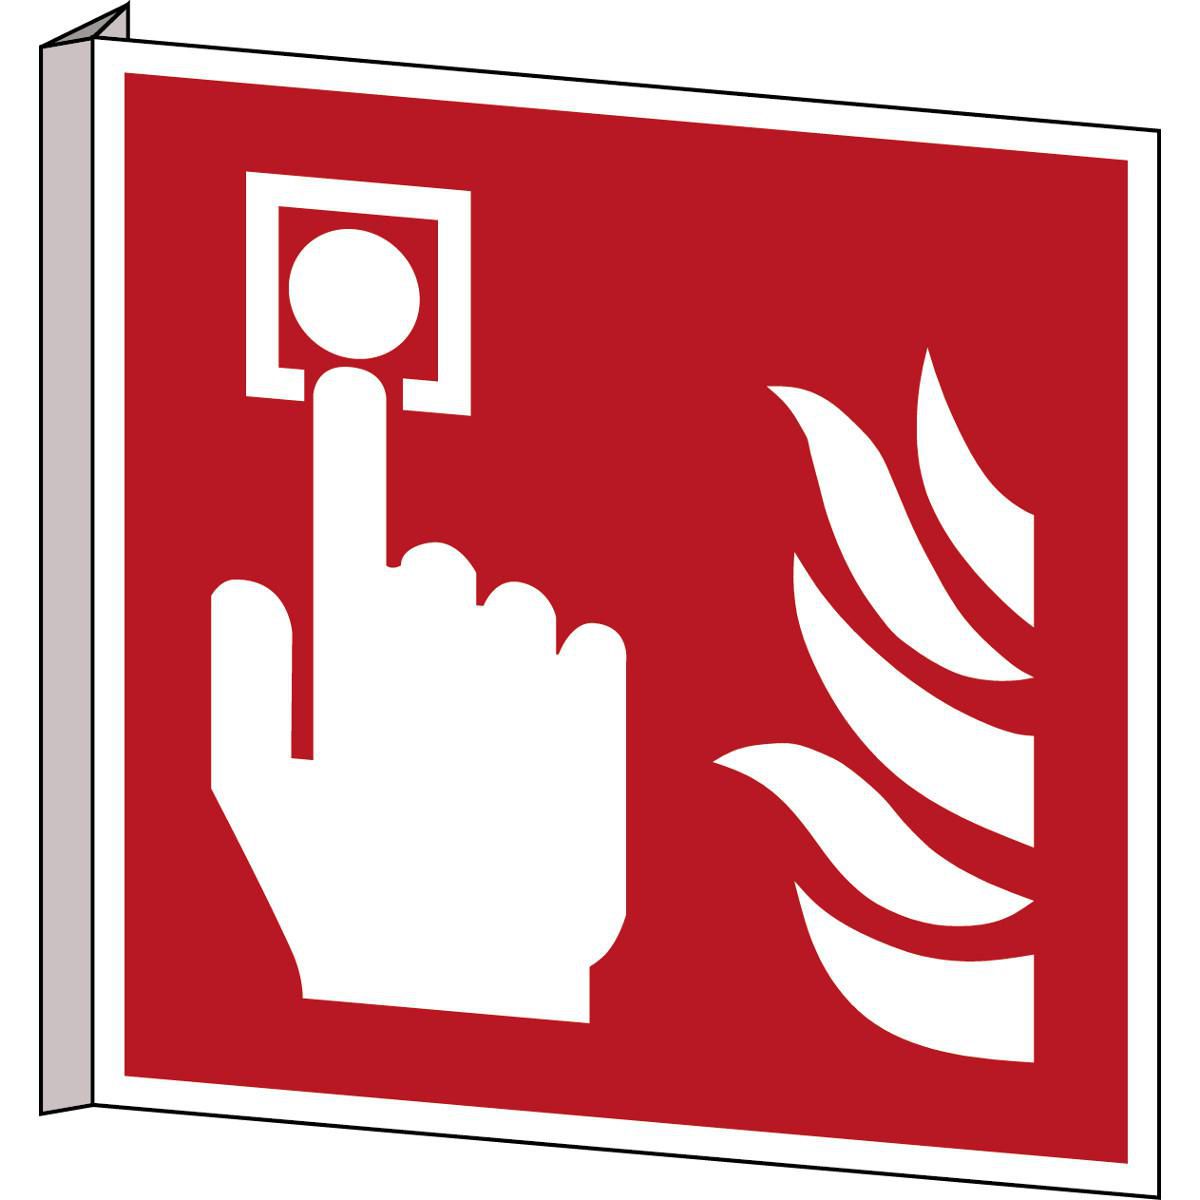 Brady PIC F005-318X318-BIPVC-CRD1 W128410429 ISO Safety Sign - Fire alarm 